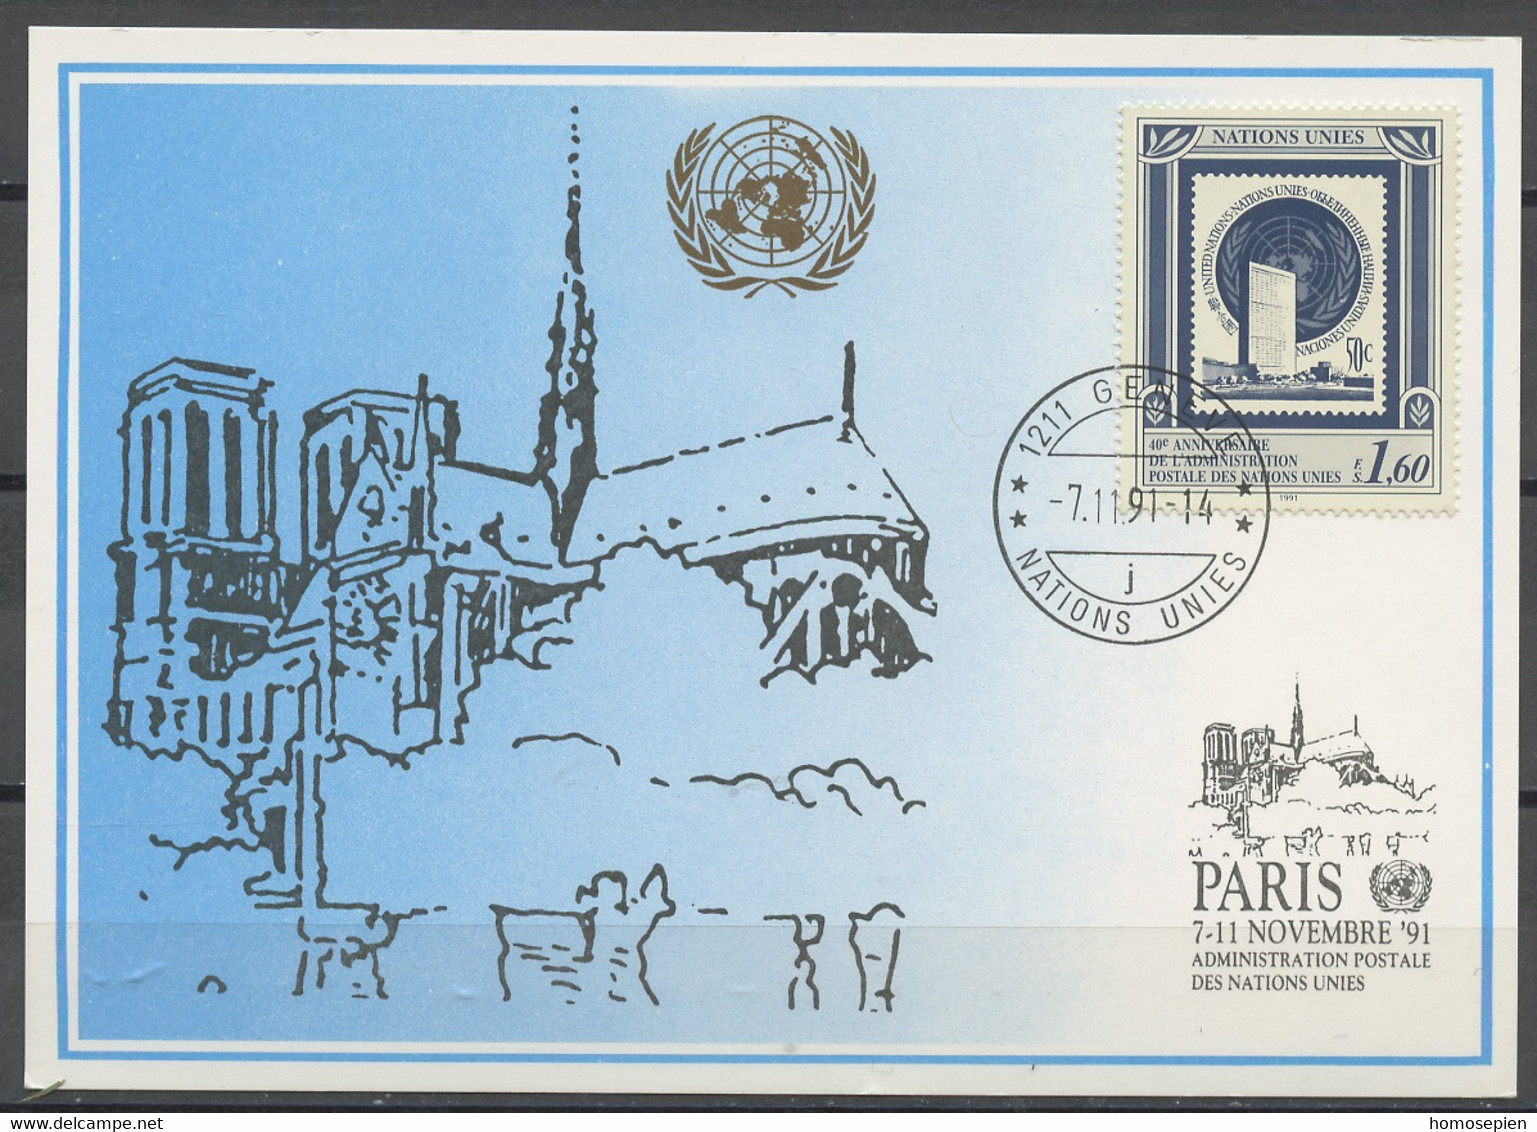 NU Genève - Vereinte Nationen CM 1991 Y&T N°215 - Michel N°215 - 1,60f Siège De L'ONU - Cartoline Maximum